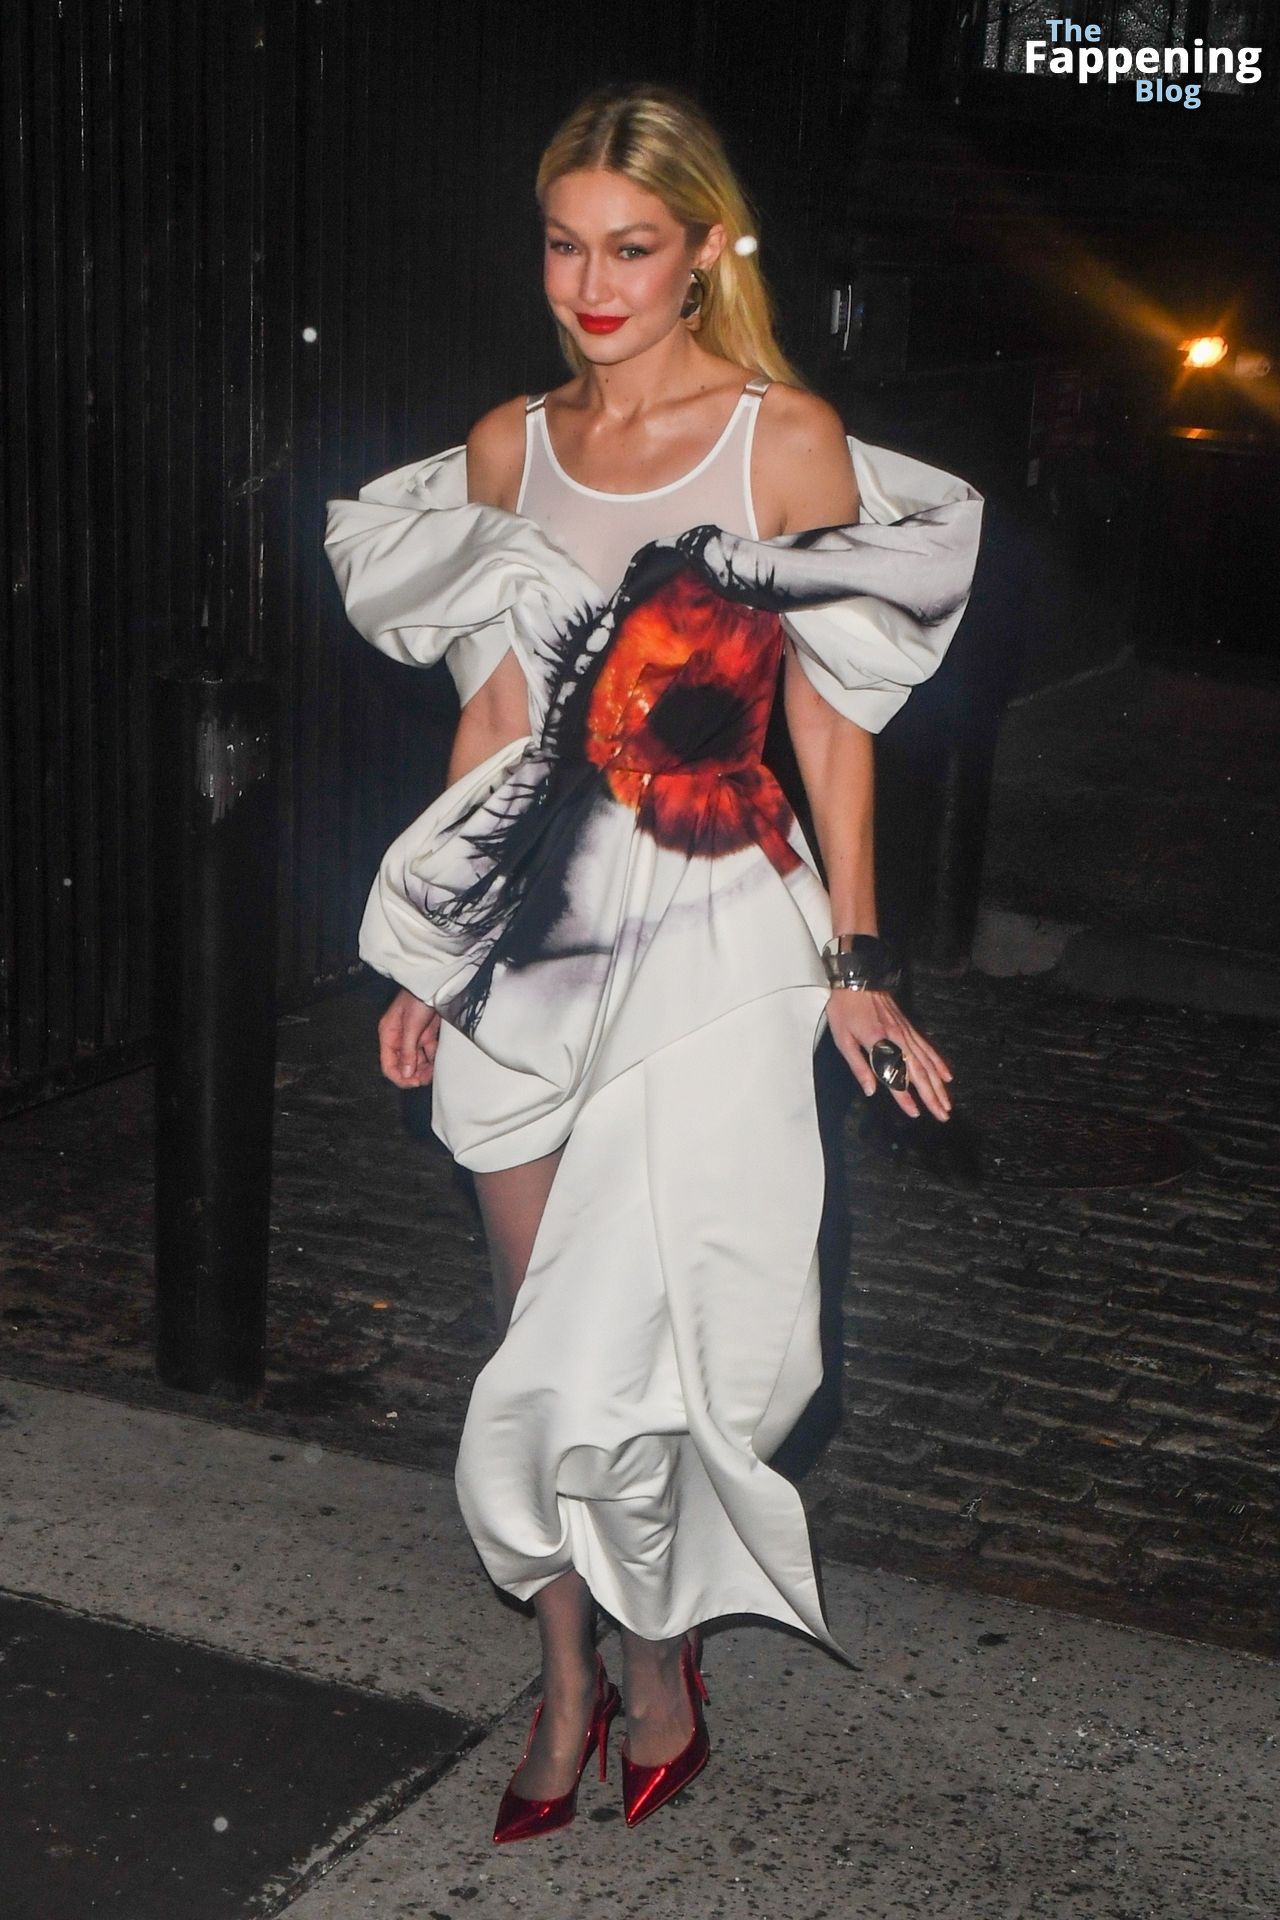 Gigi Hadid Conquers Bond Street as She Takes a Short Walk to Zero Bond for a Private Party (53 Photos)